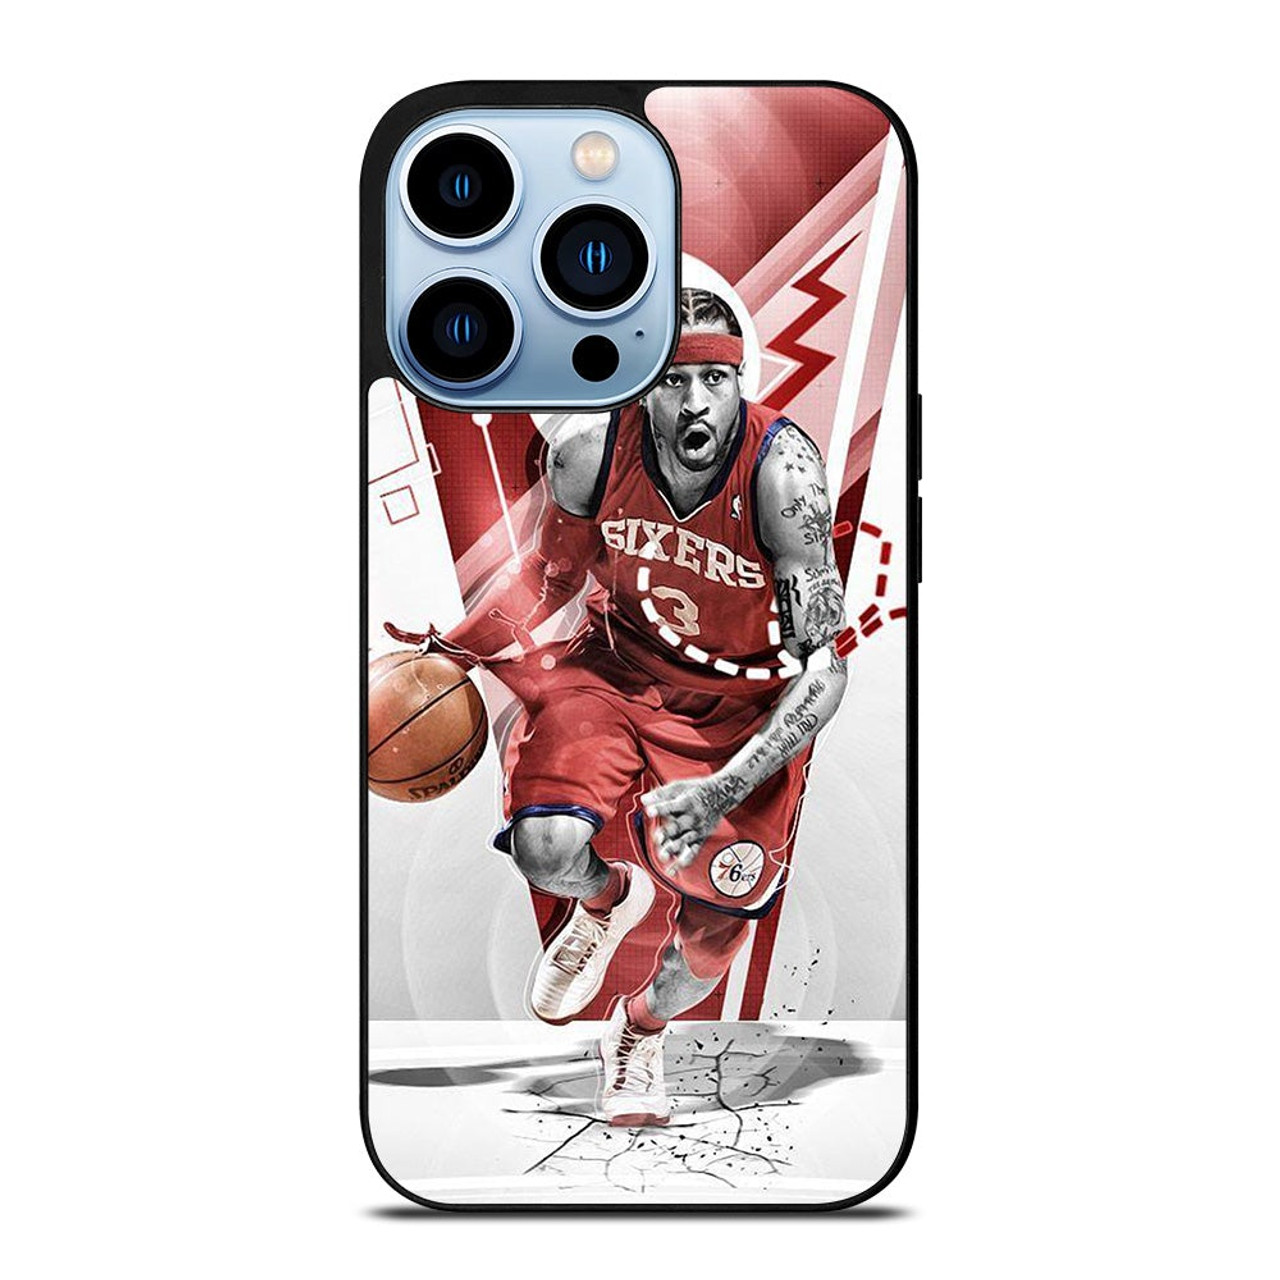 Ls Down Louisville Kentucky Basketball iPhone Case for Sale by tdjeff02